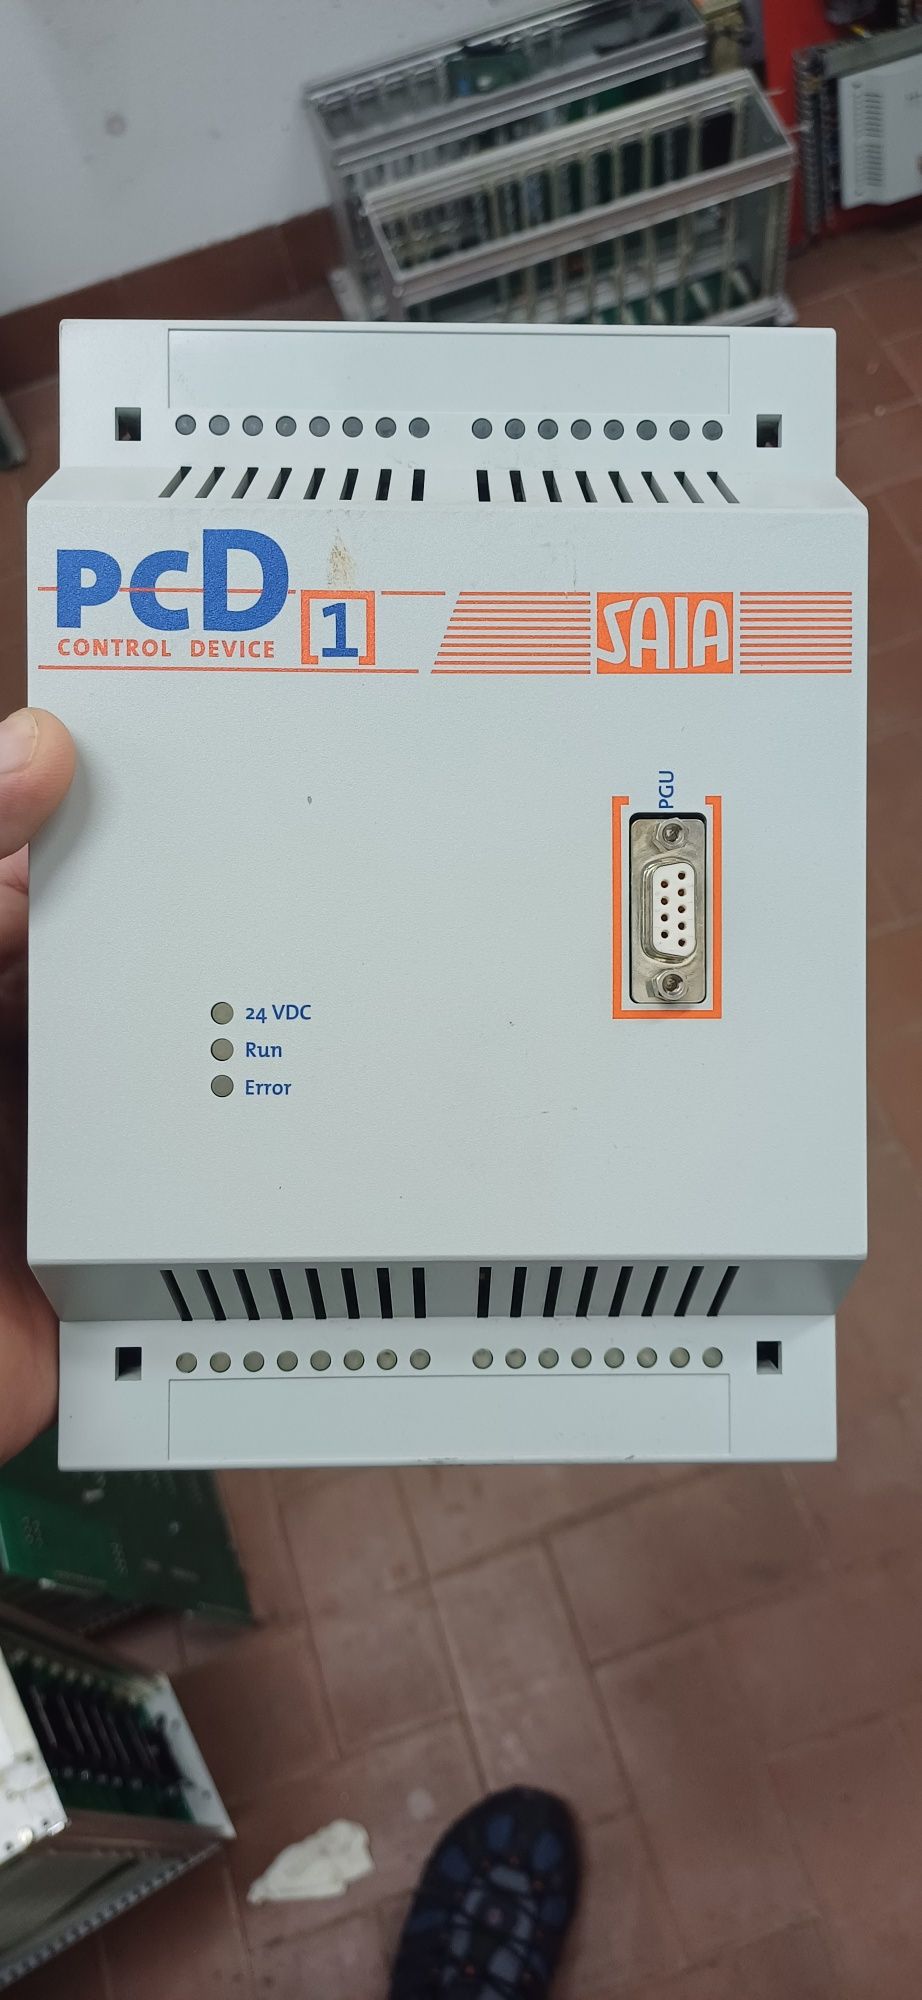 Autómato Saia - PCD1